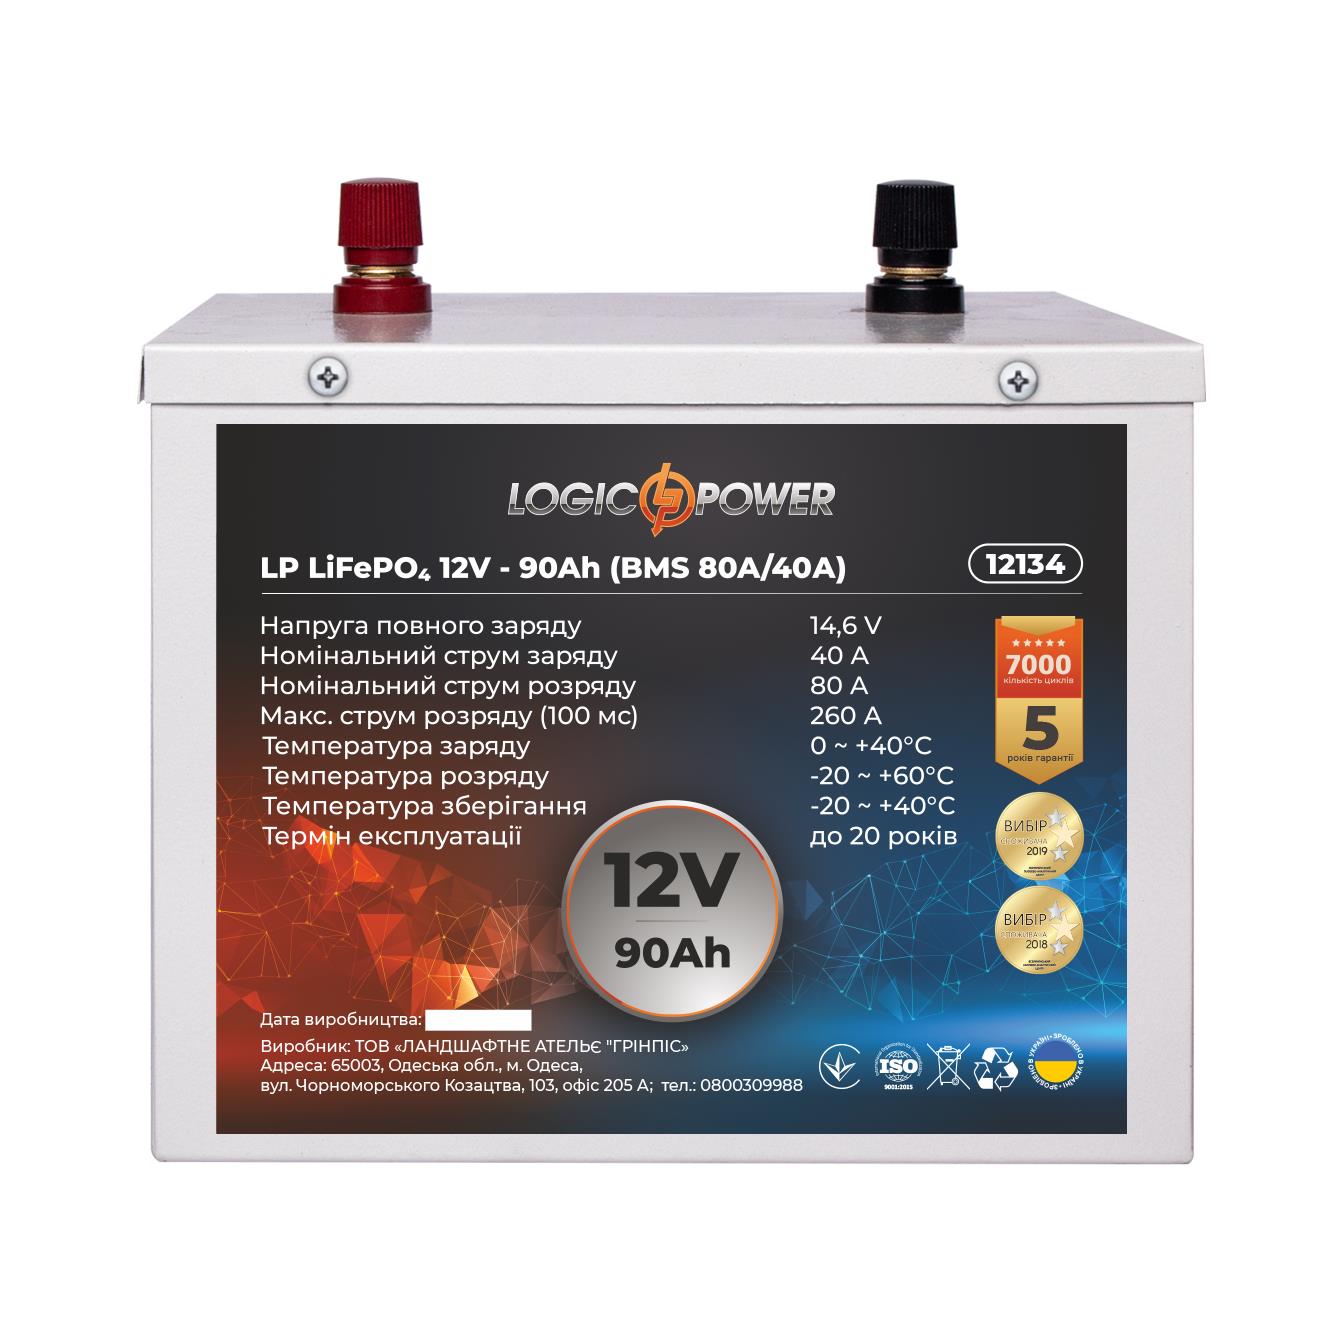 Аккумулятор литий-железо-фосфатный LogicPower LP LiFePO4 12V - 90 Ah (BMS 80A/40A) металл (12134) в Львове